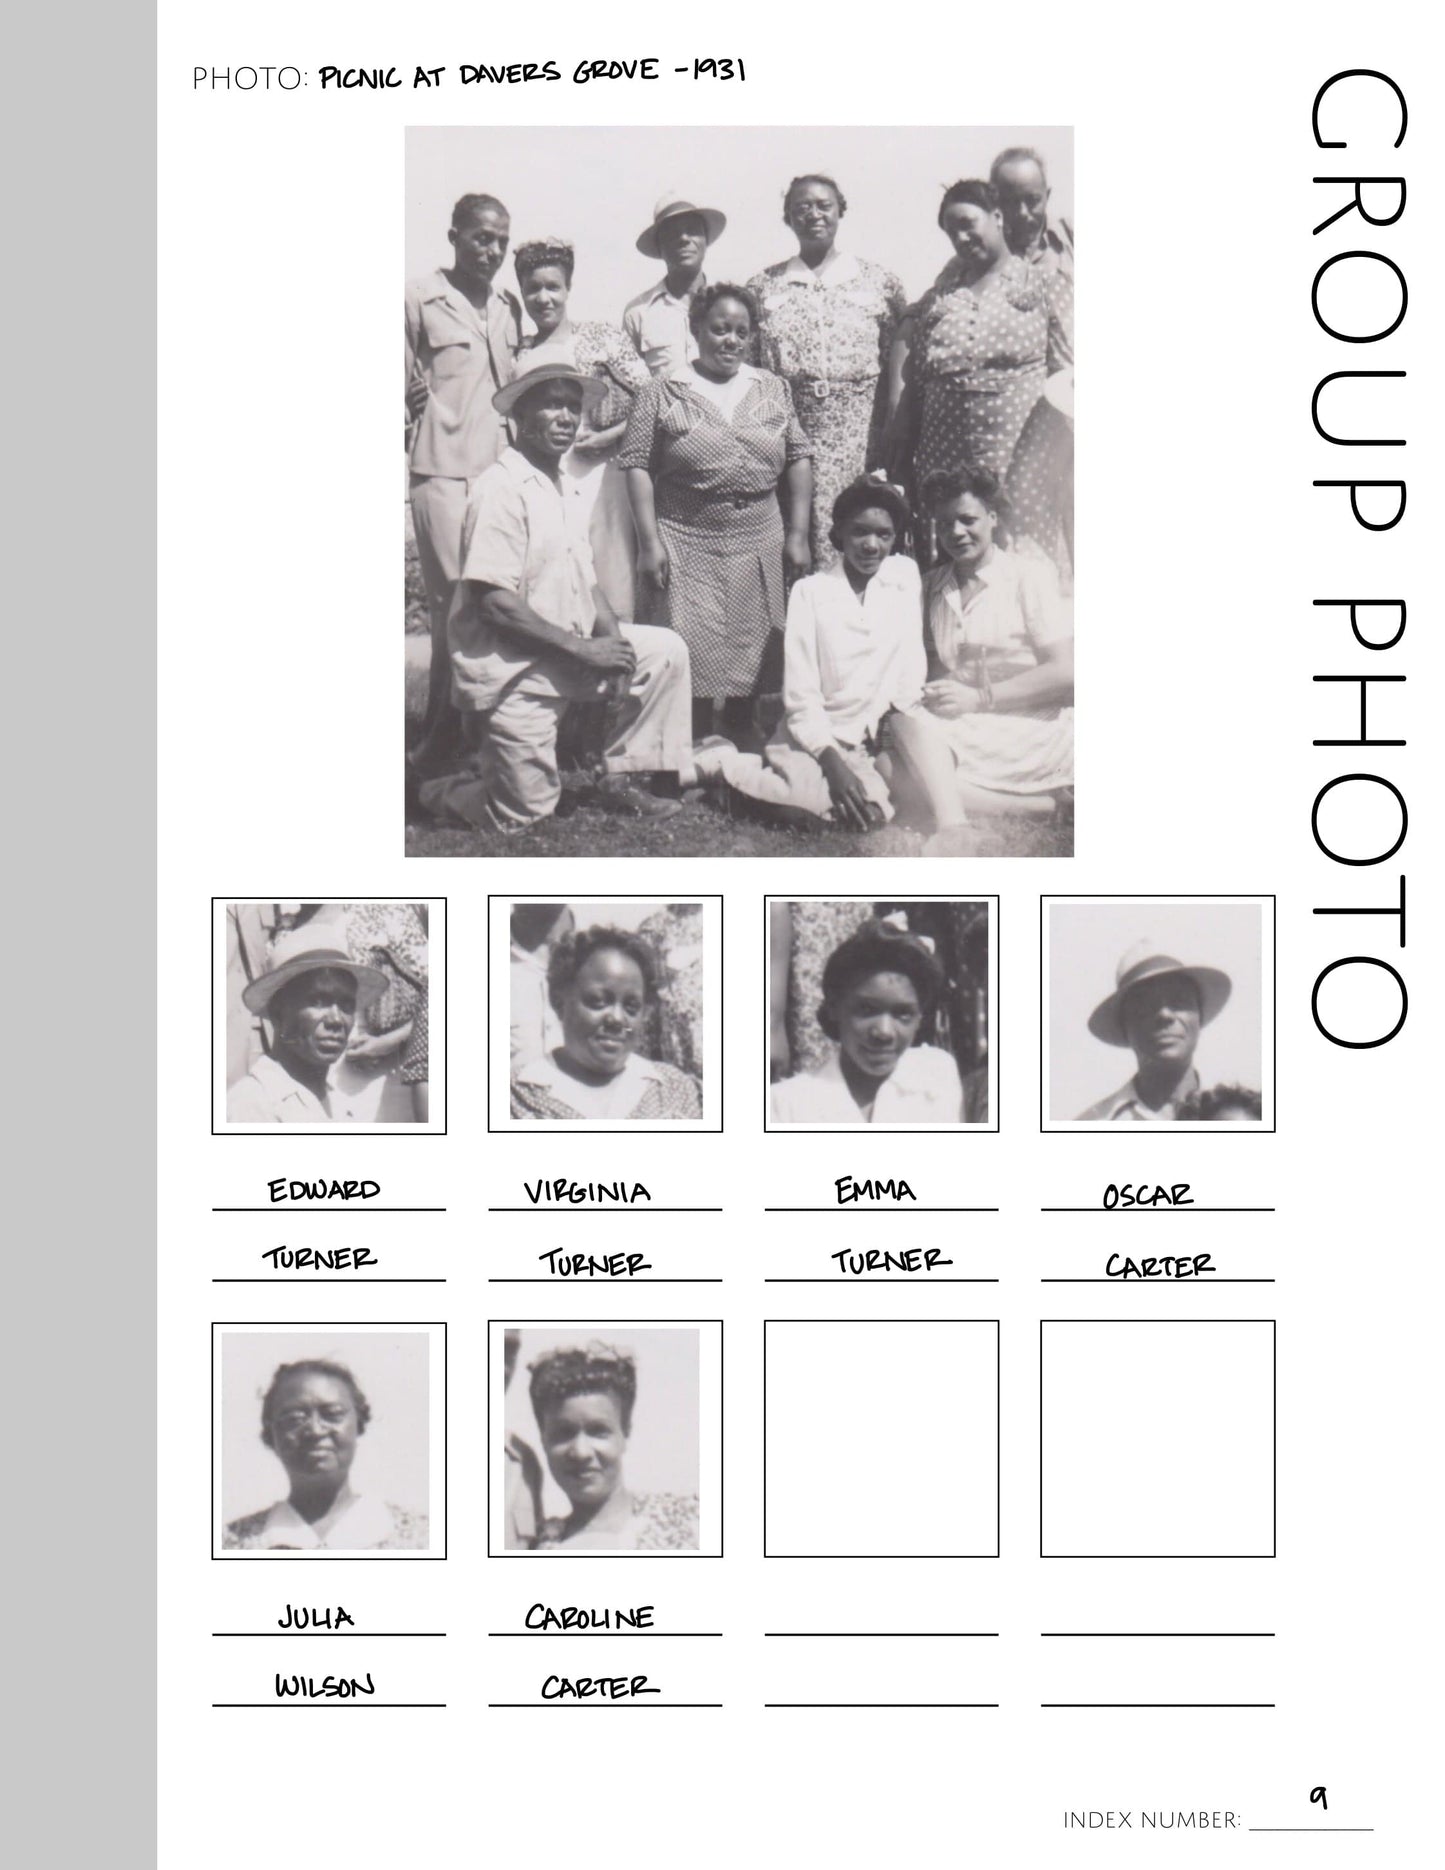 Group Photo: Printable Genealogy Form (Digital Download)